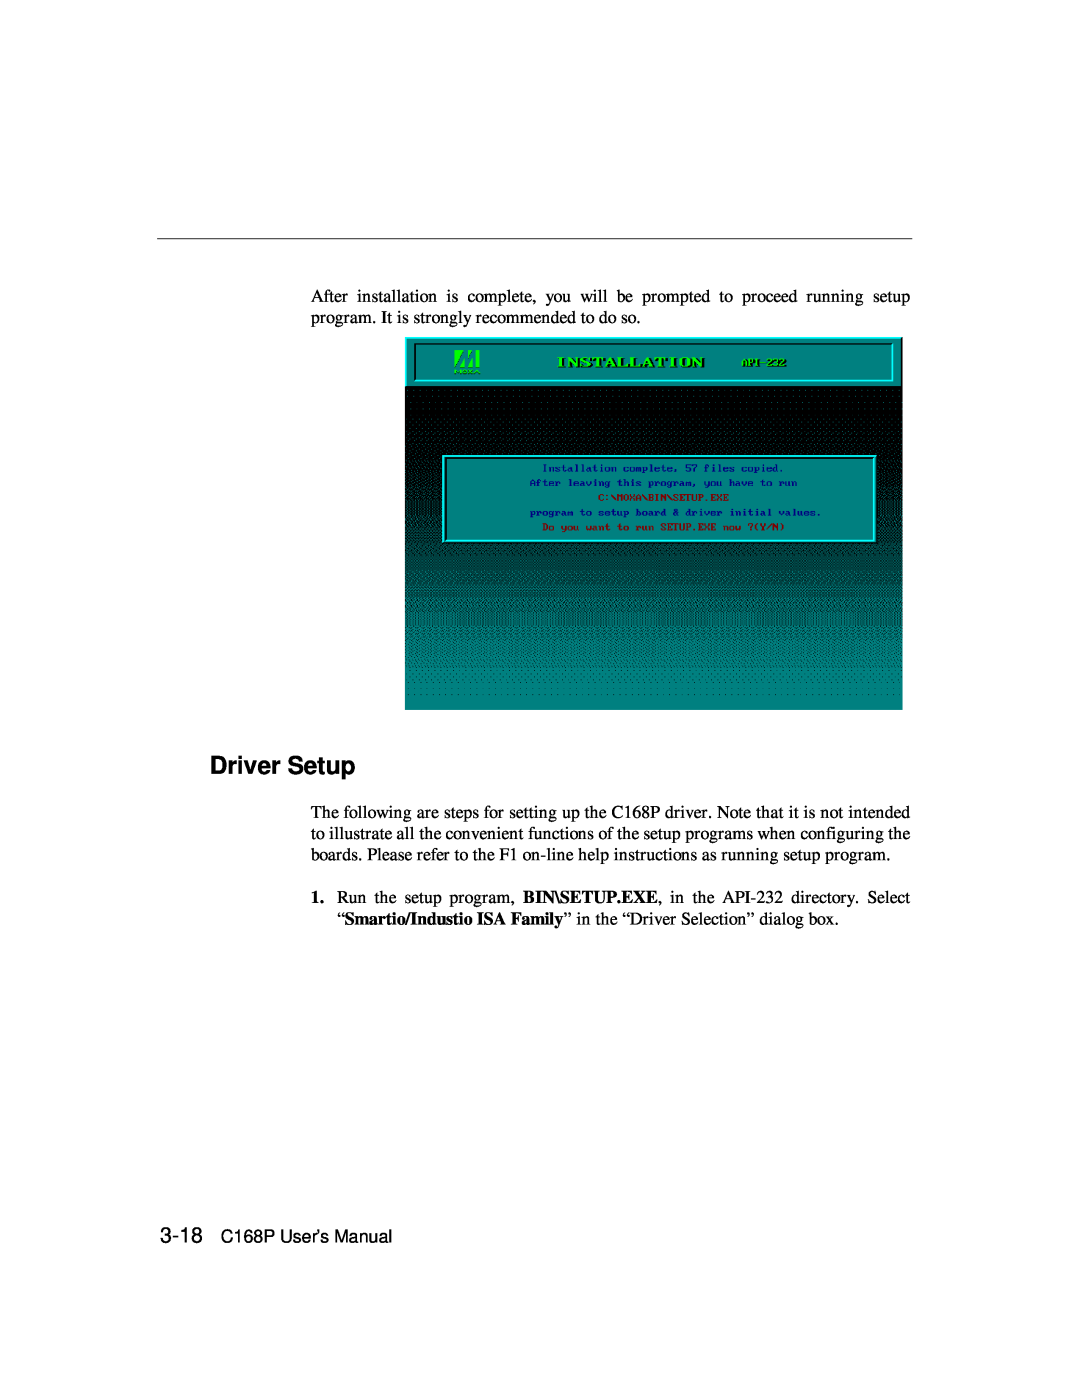 Moxa Technologies user manual Driver Setup, 3-18 C168P User’s Manual 